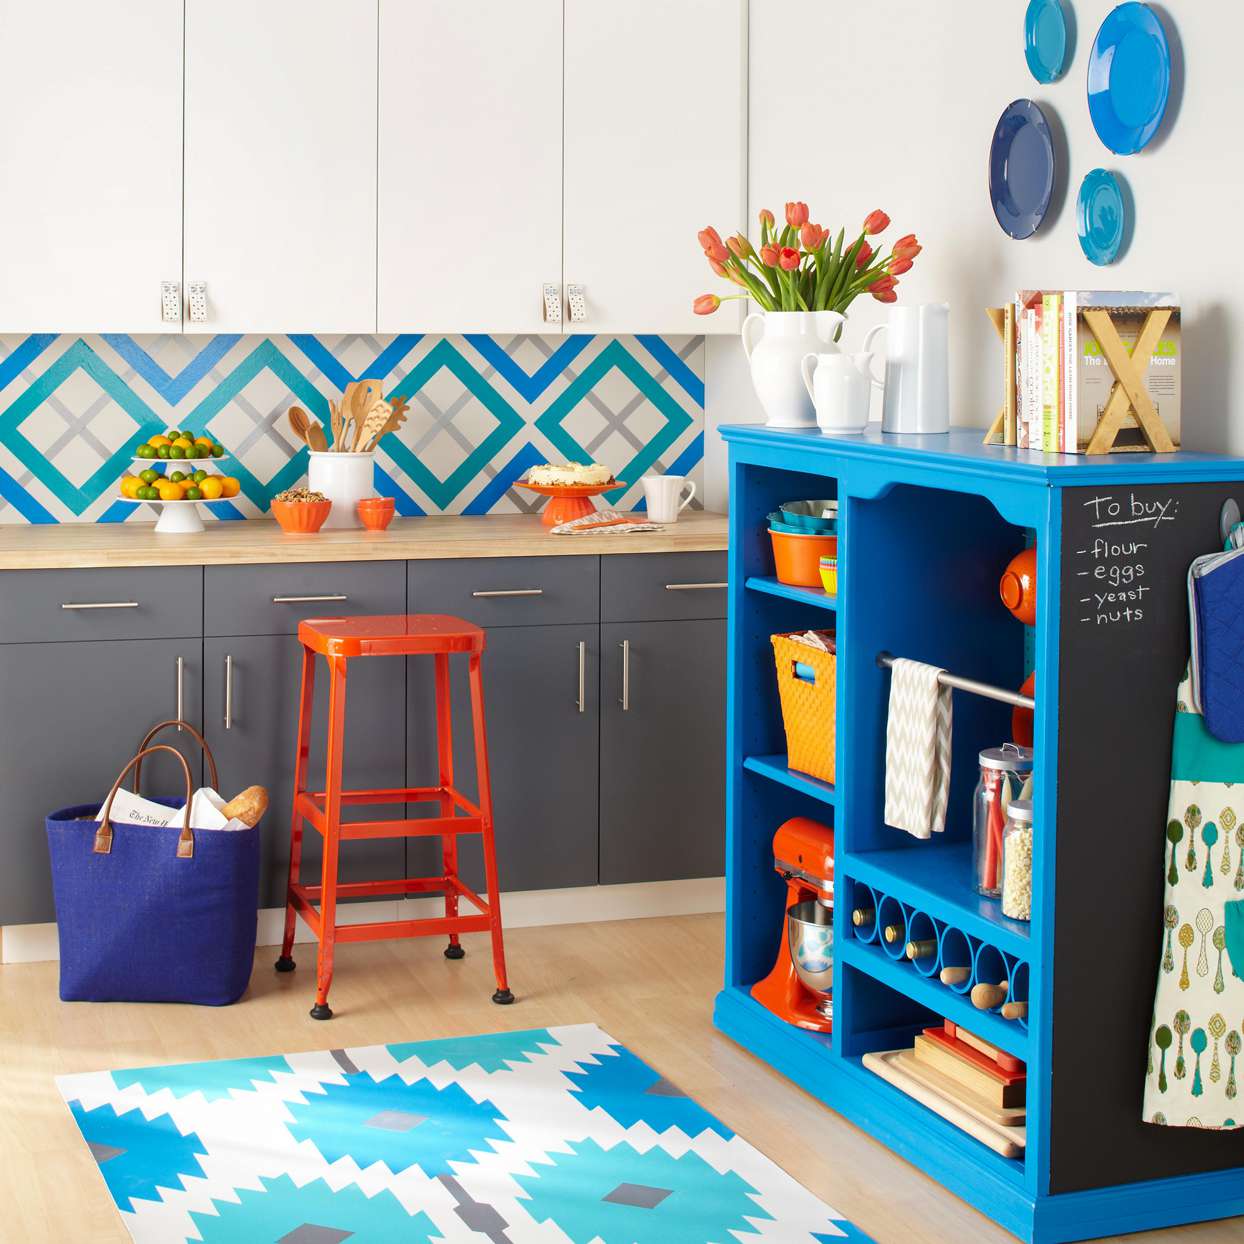 kitchen vivid colors pattern backsplash